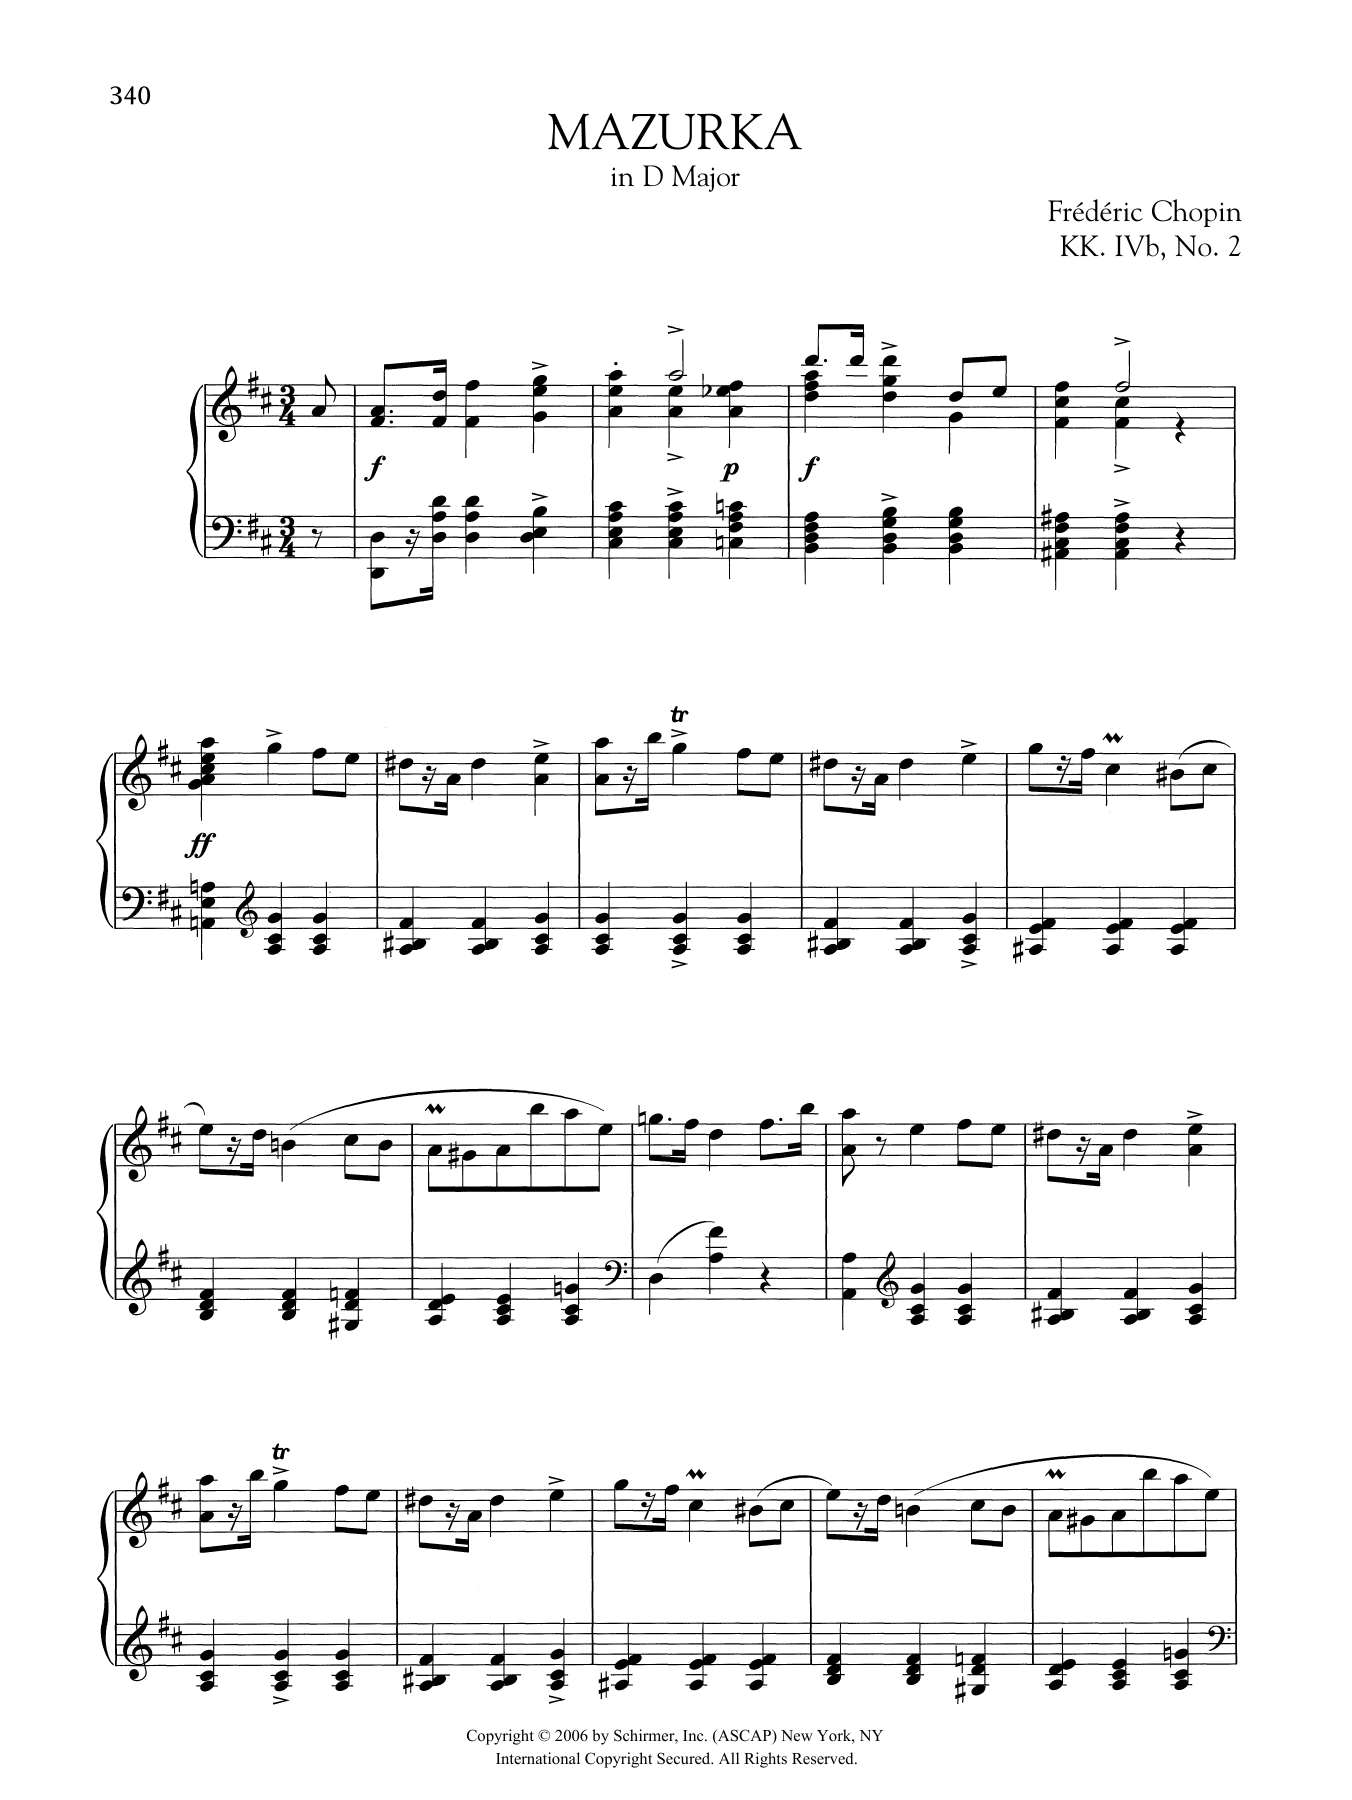 Download Frederic Chopin Mazurka in D Major, KK. IVb, No. 2 Sheet Music